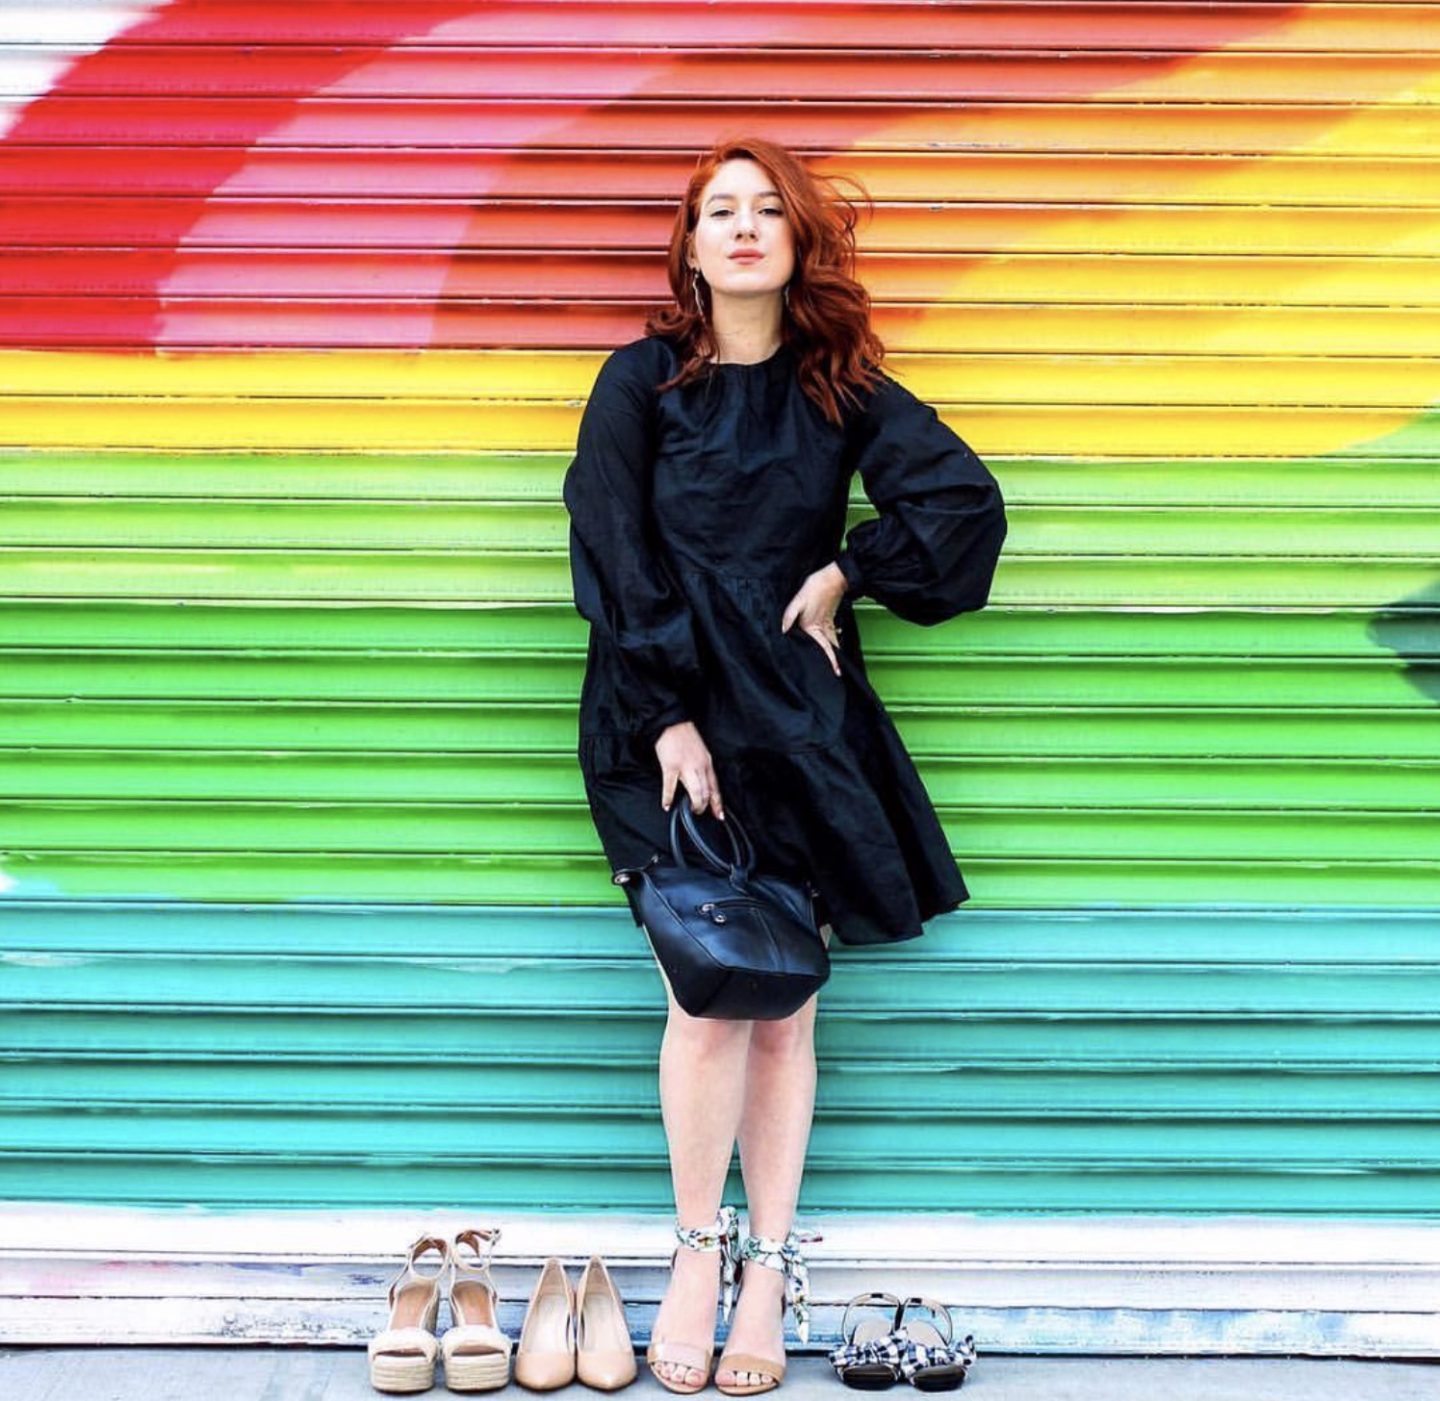 NYZ fashion blogger Megan Ziett poses for a paid partnership with Aerosoles.